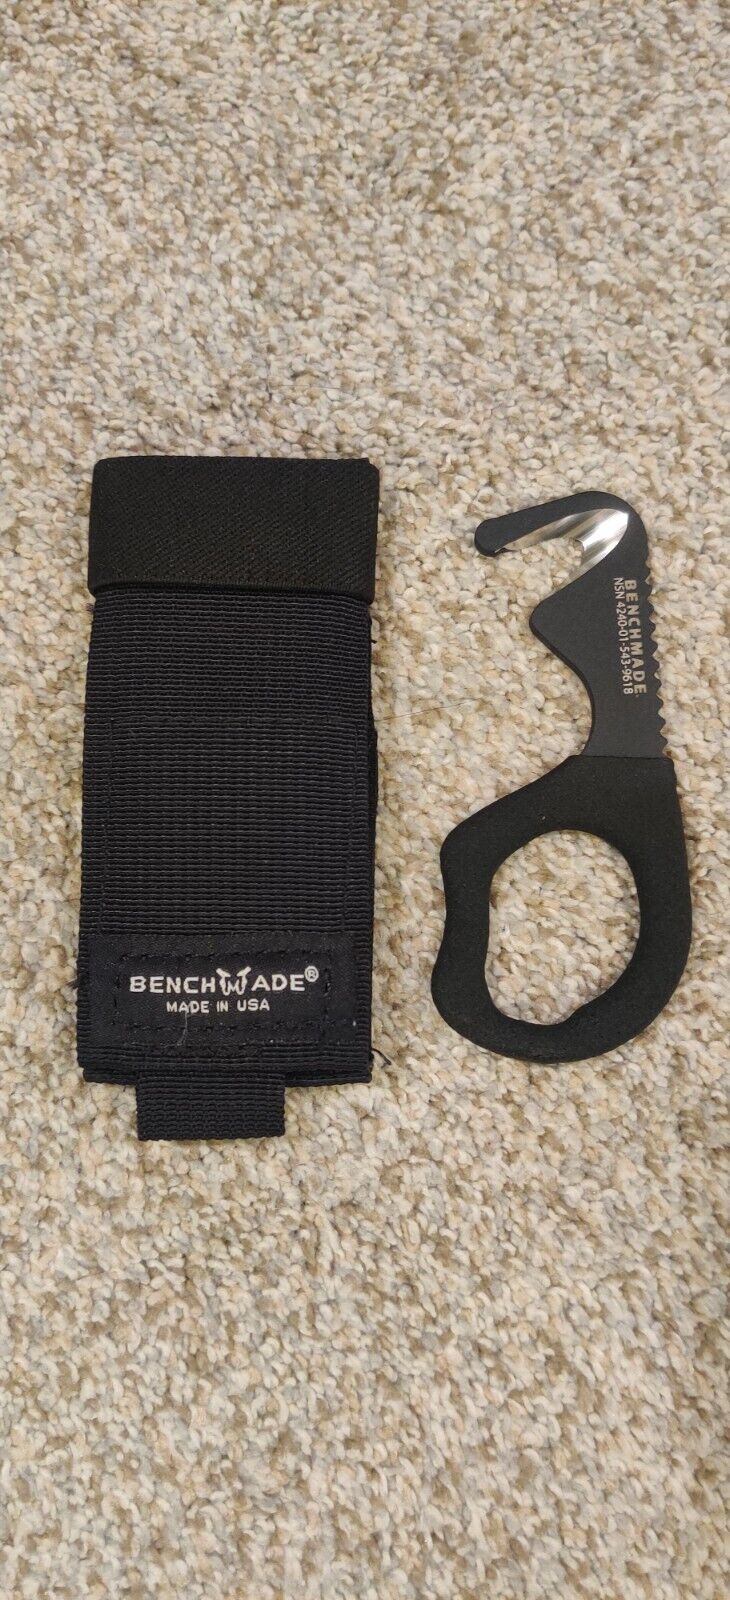 Benchmade Seat Belt Cutter - Black MOLLE Sheath